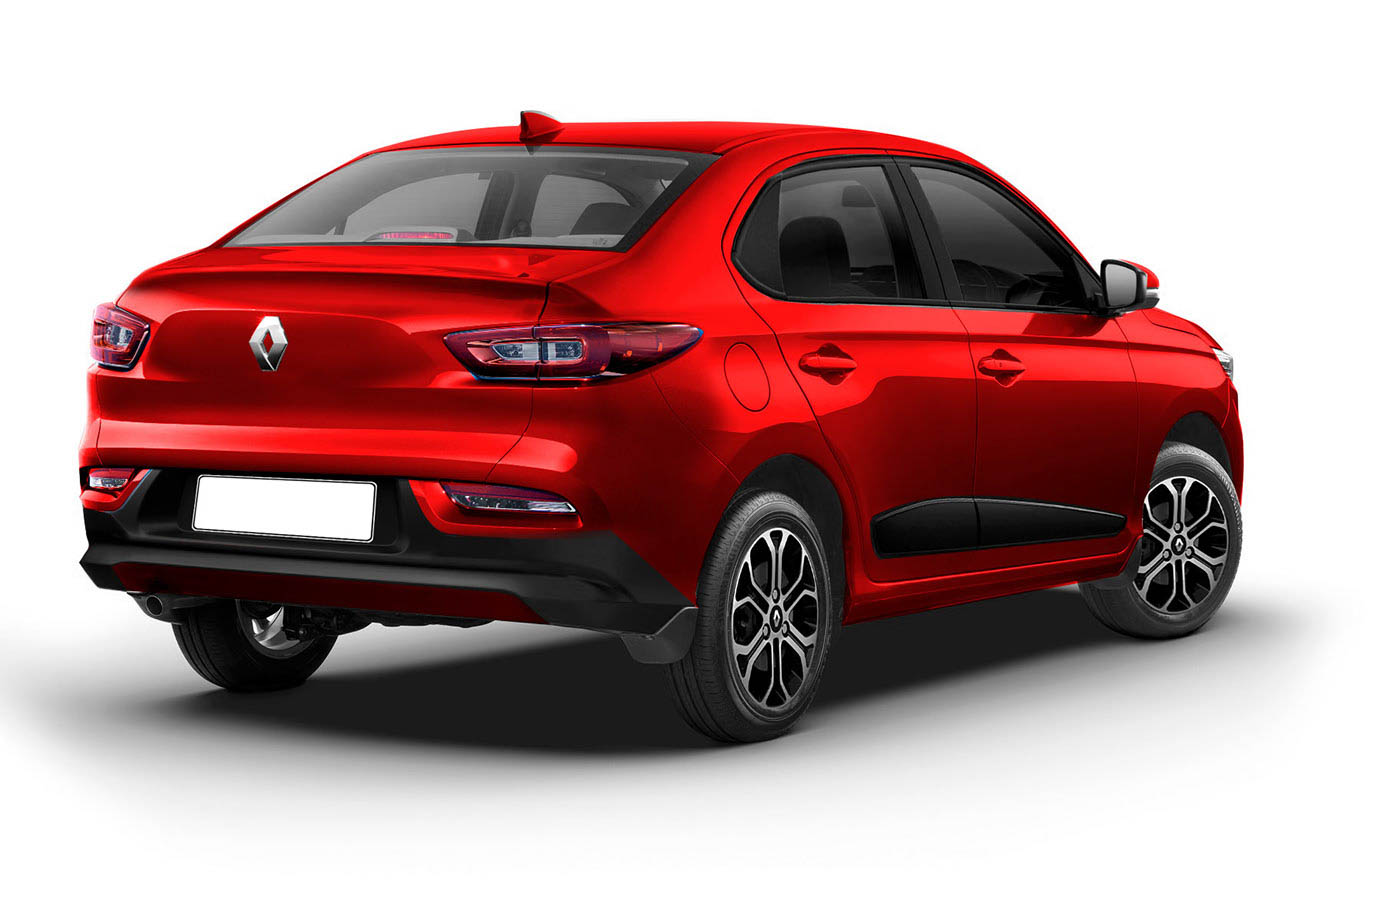 https://gaadiwaadi.com/wp-content/uploads/2020/05/Renault-Kwid-Based-Sedan-Rendered.jpg